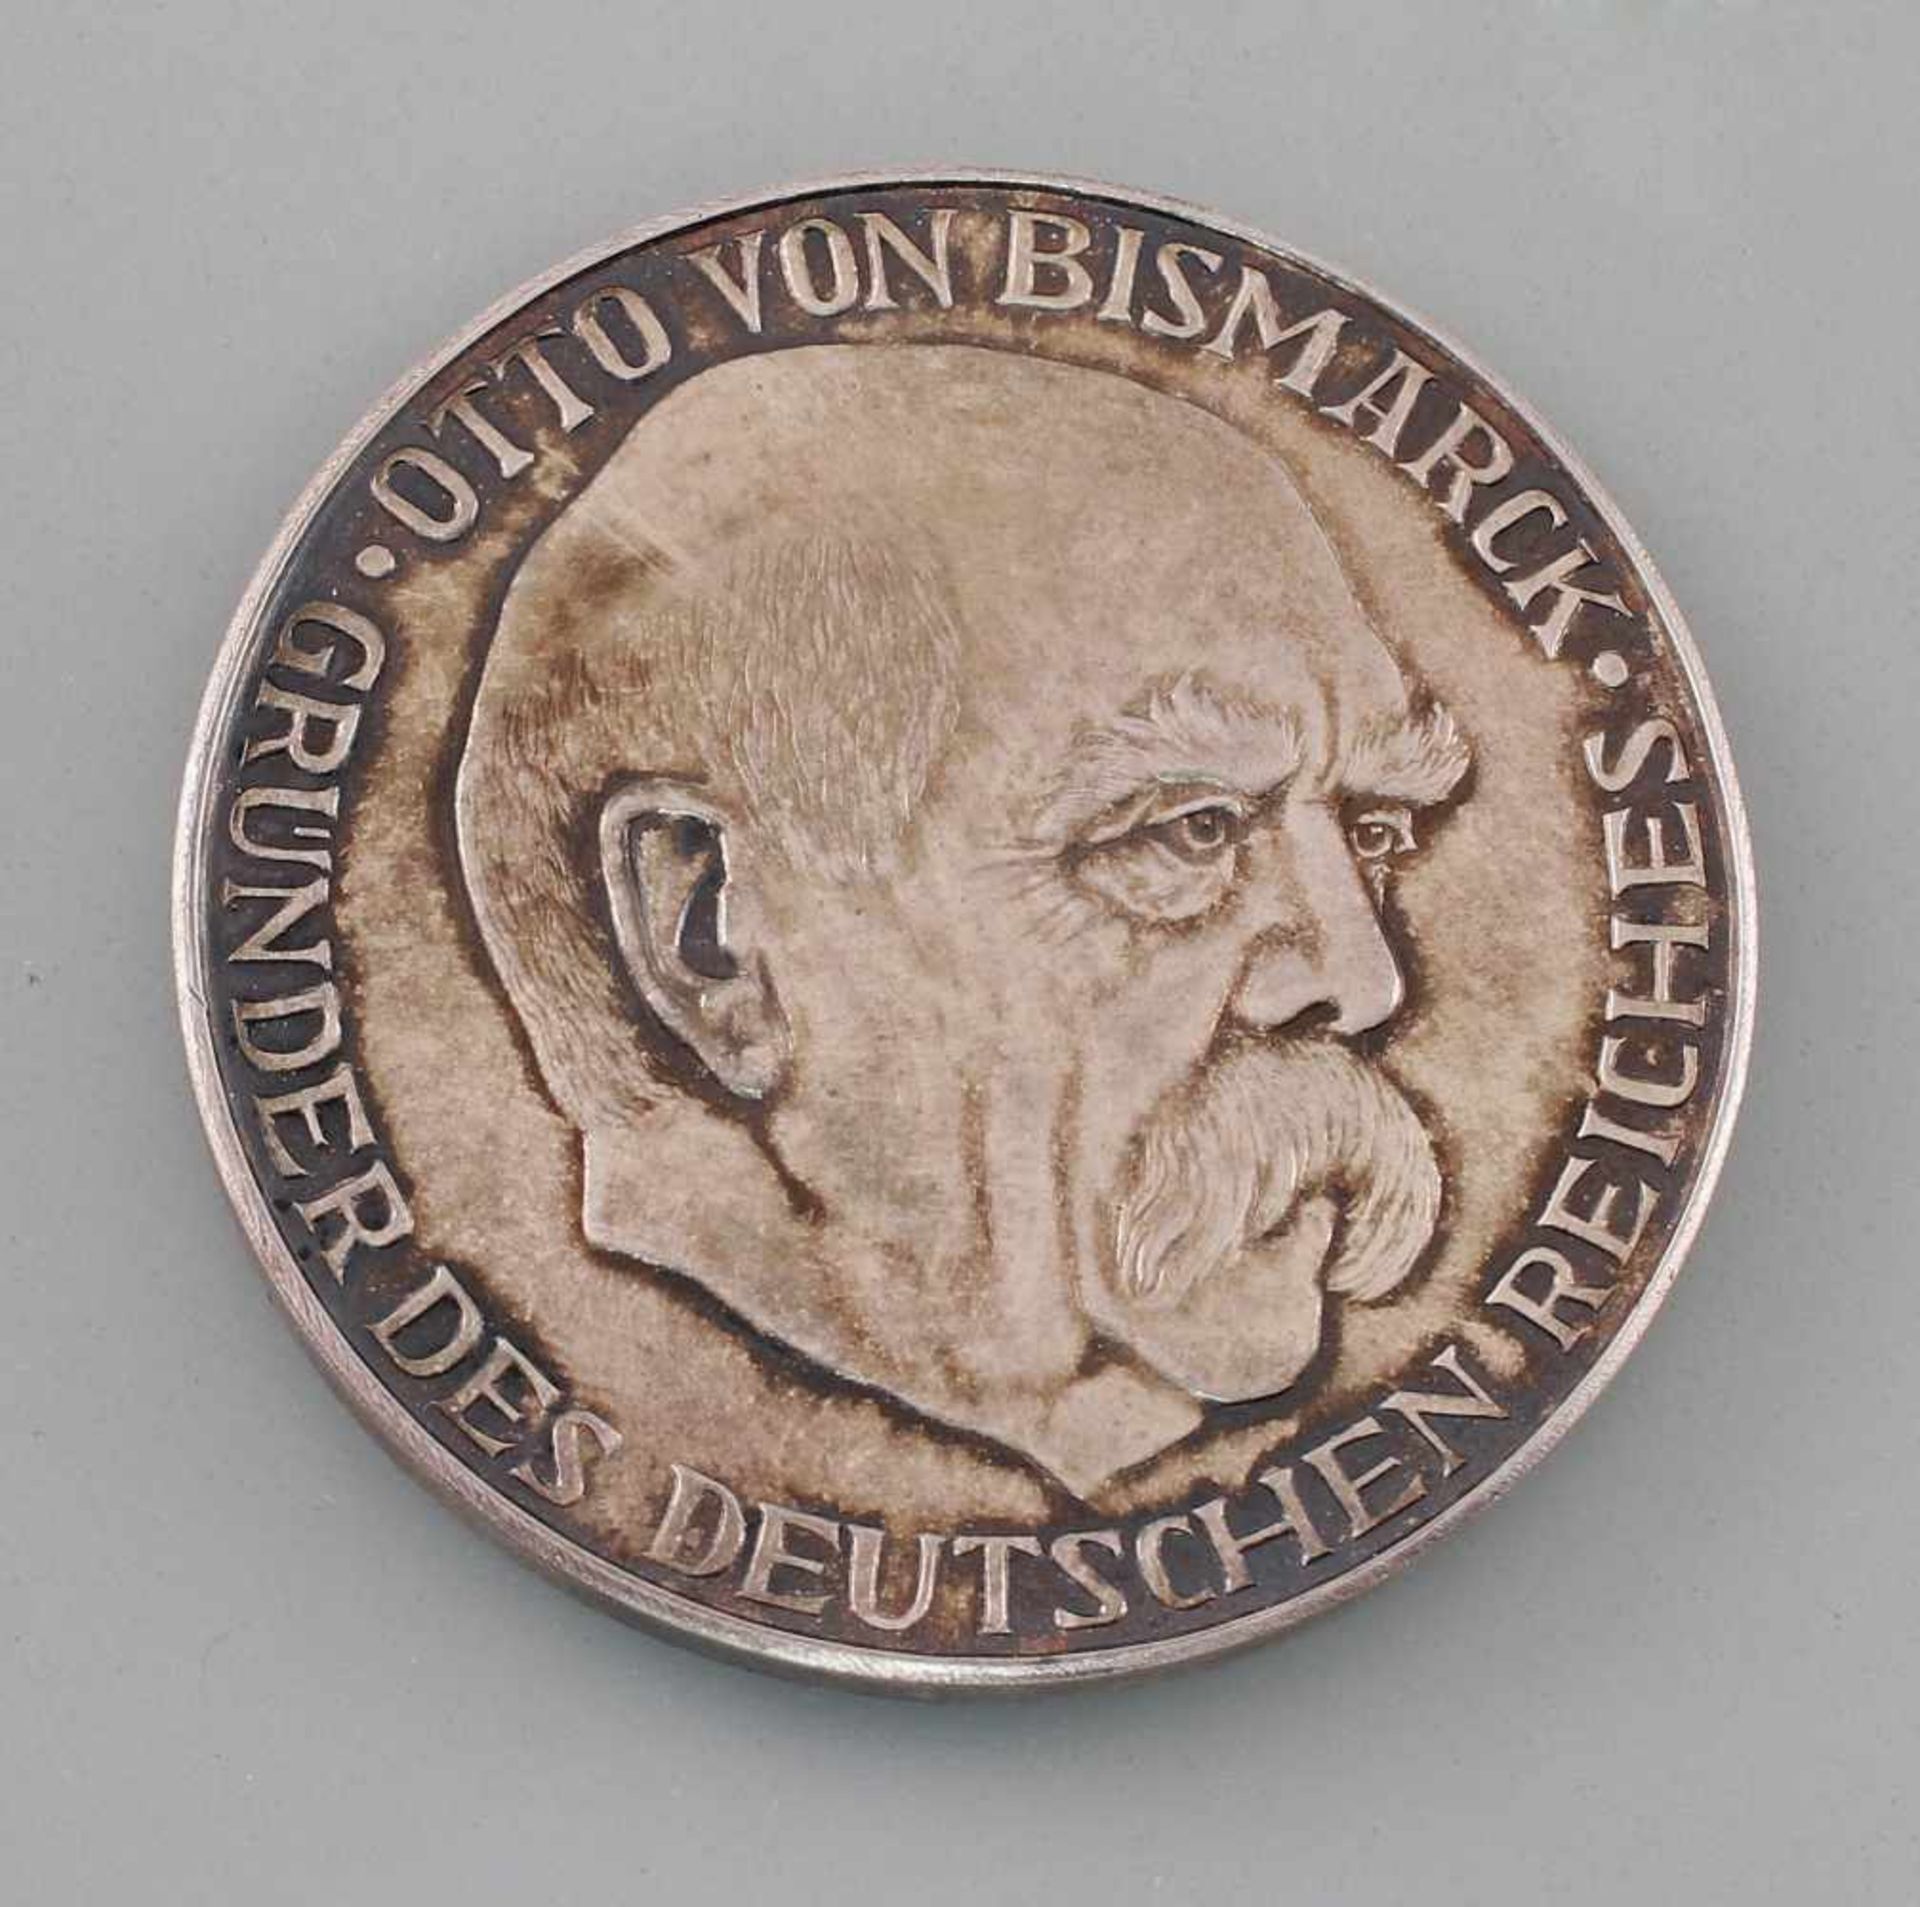 Große Silber-Medaille Bismarck 100 Jahre Kaiserproklamation1000er Silber, gepunzt, ca. 50 g, Vs - Bild 2 aus 2